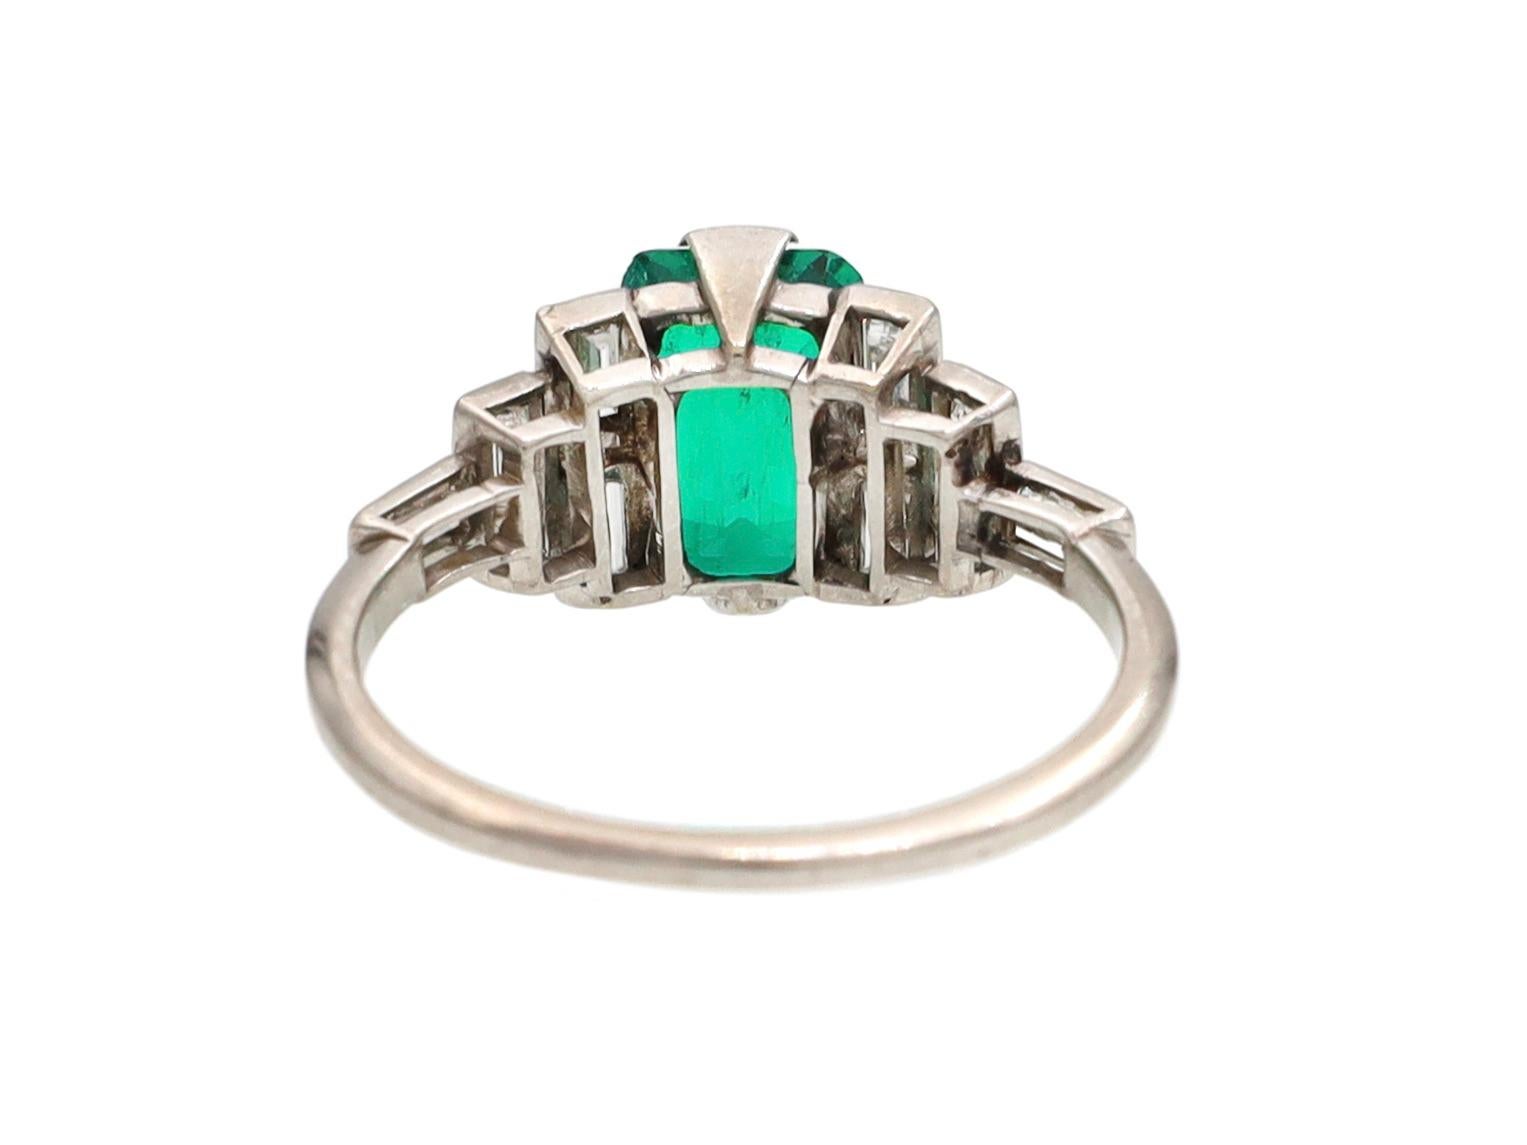 Emerald Cut Art Deco GCS Certified Colombian Emerald and Baguette Diamond Ring in Platinum